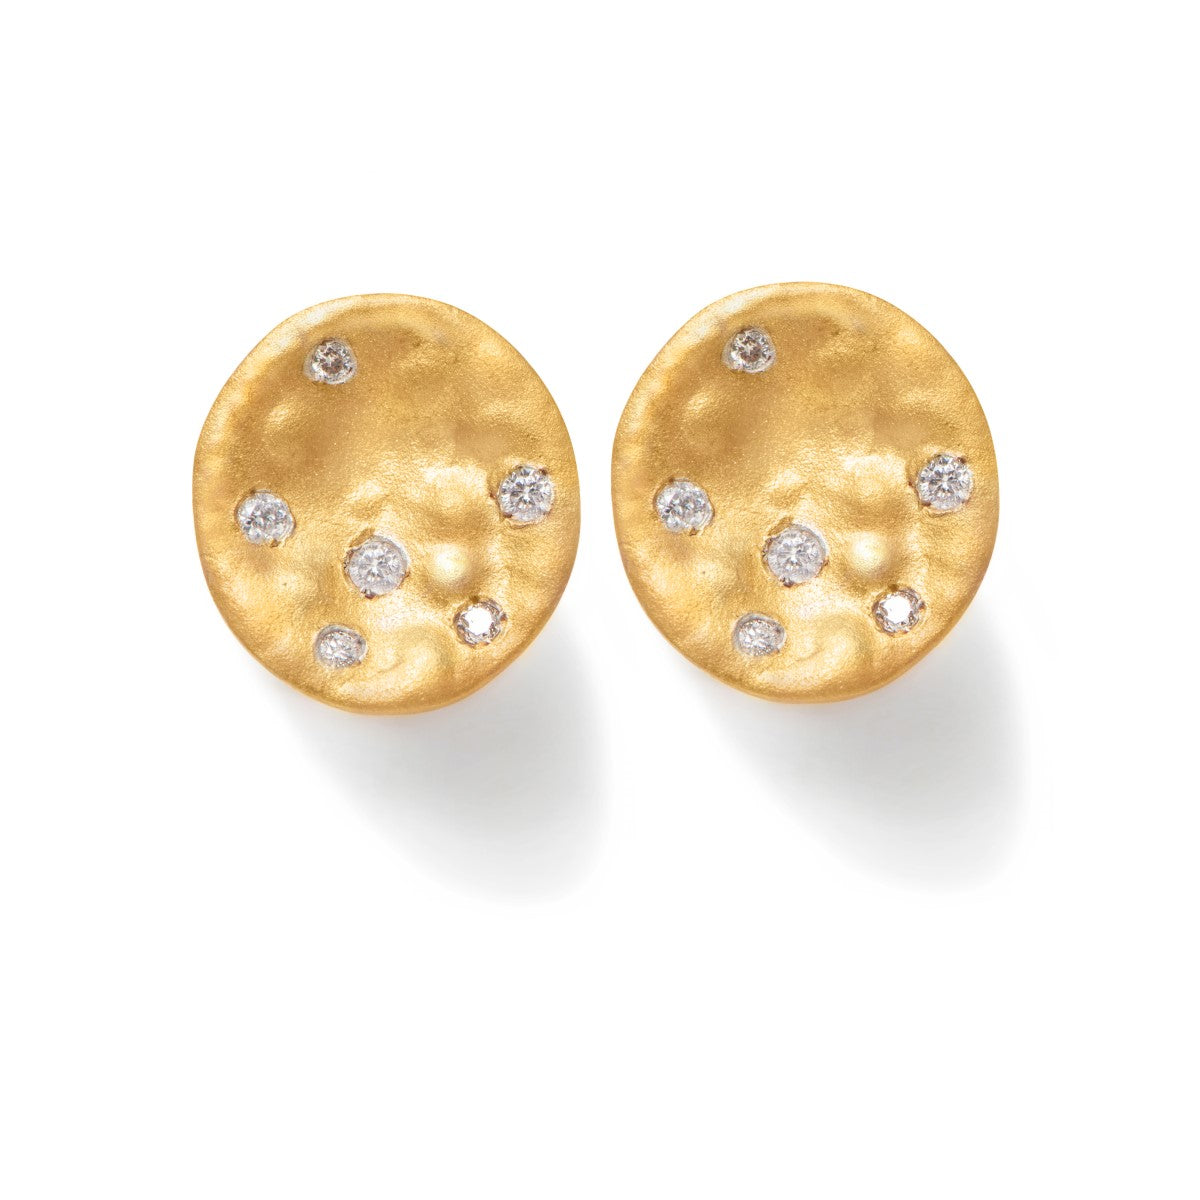 Earrings in 9k Yellow Gold with Diamonds